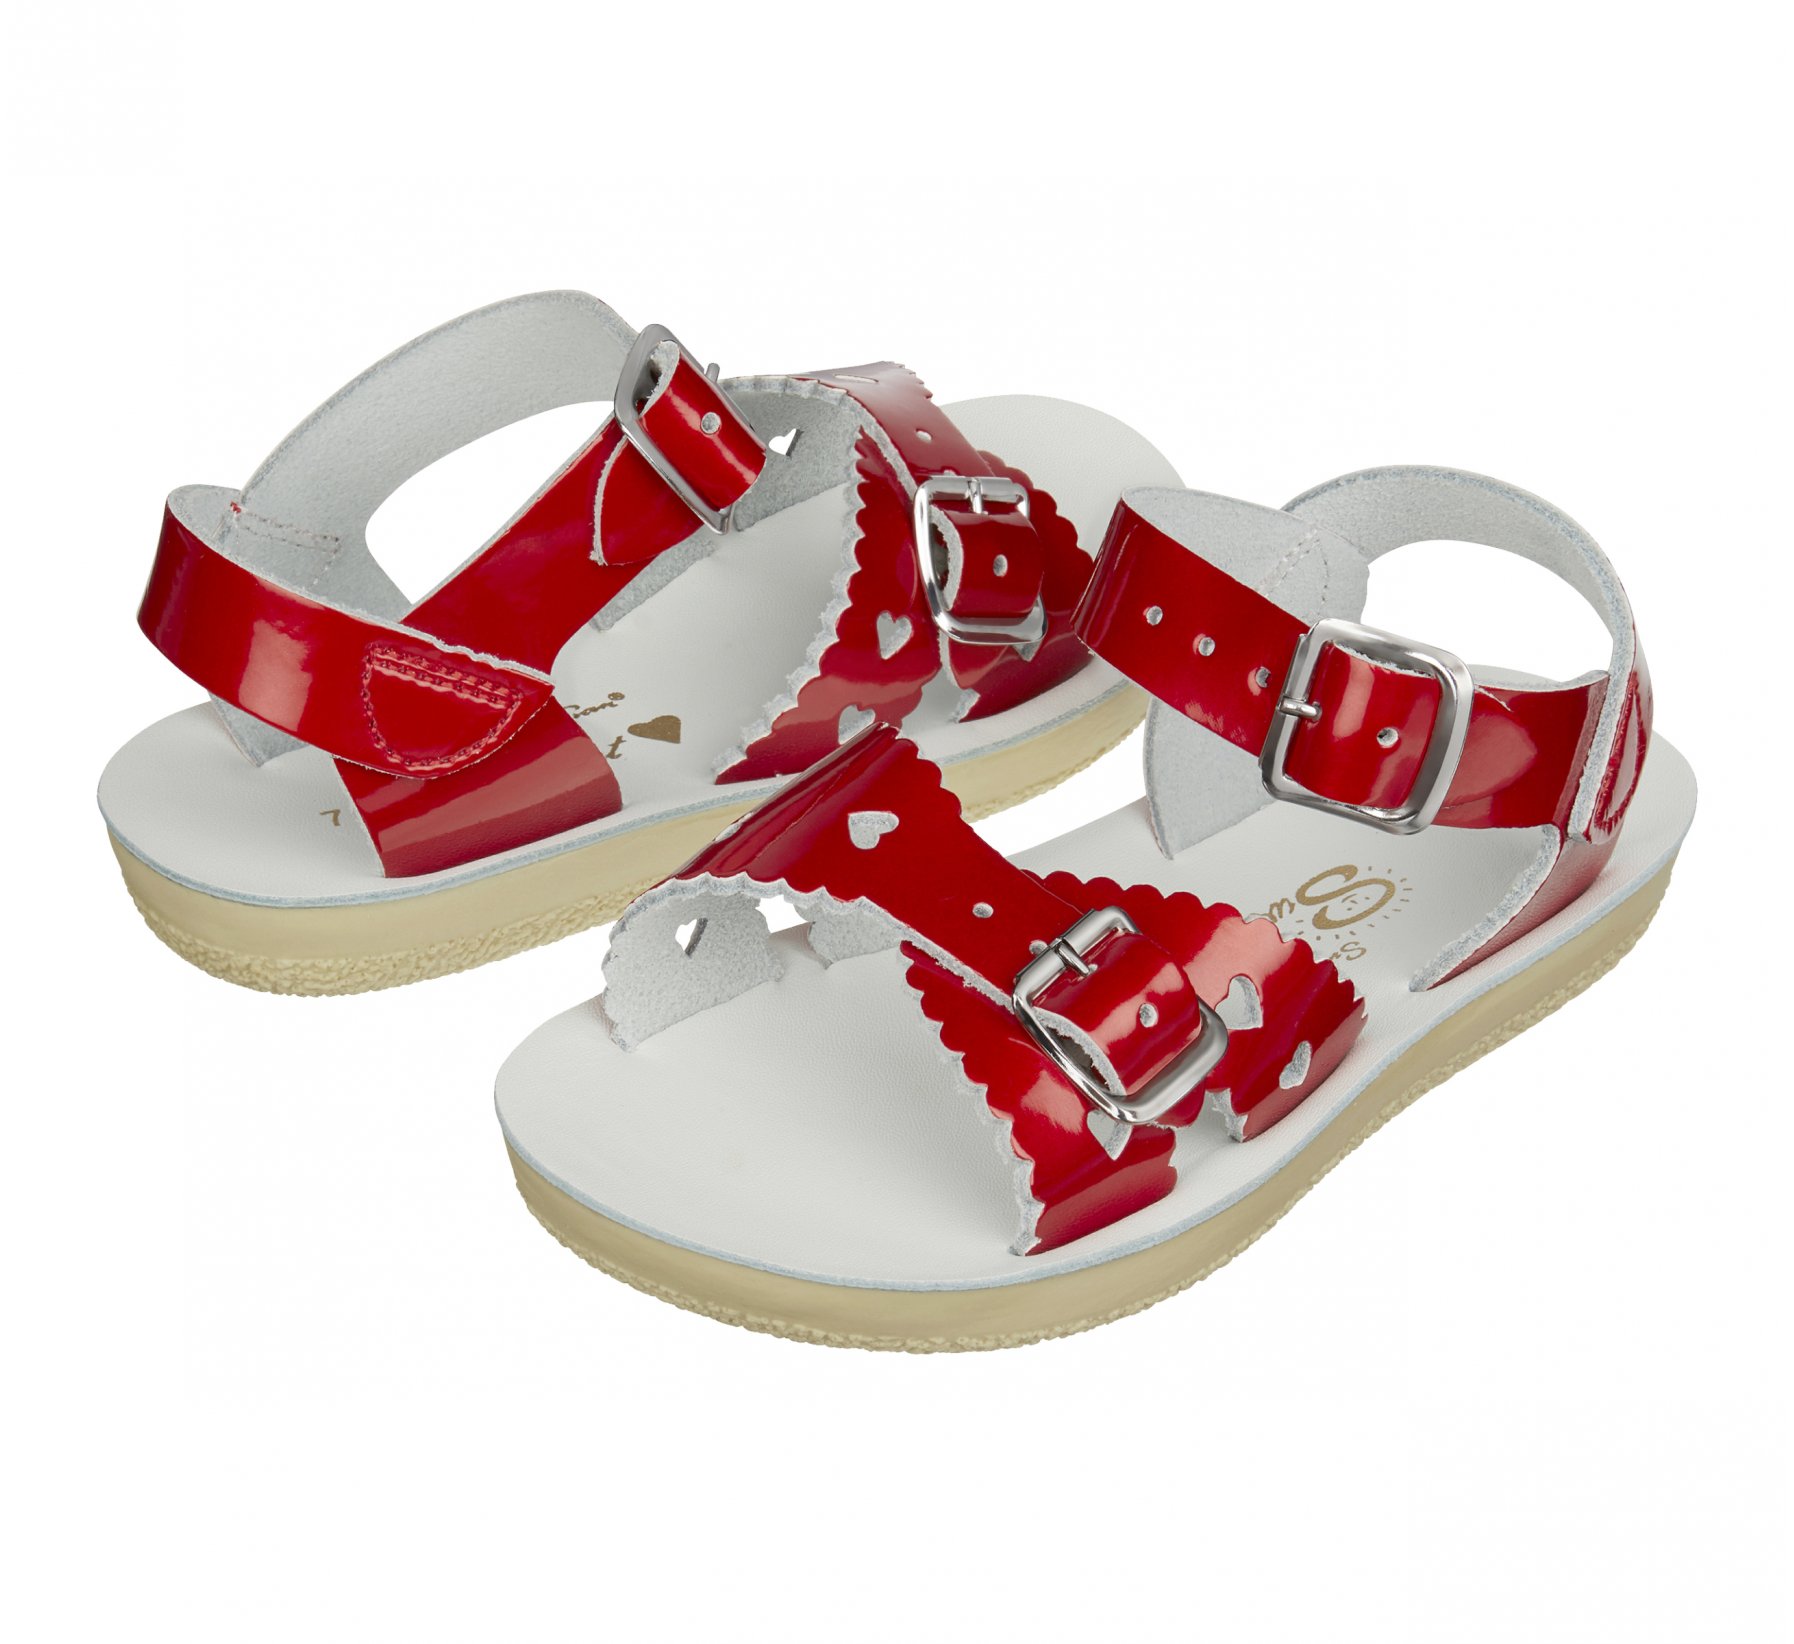 Sweetheart Candy Red Kids Sandals - Salt Water Sandals